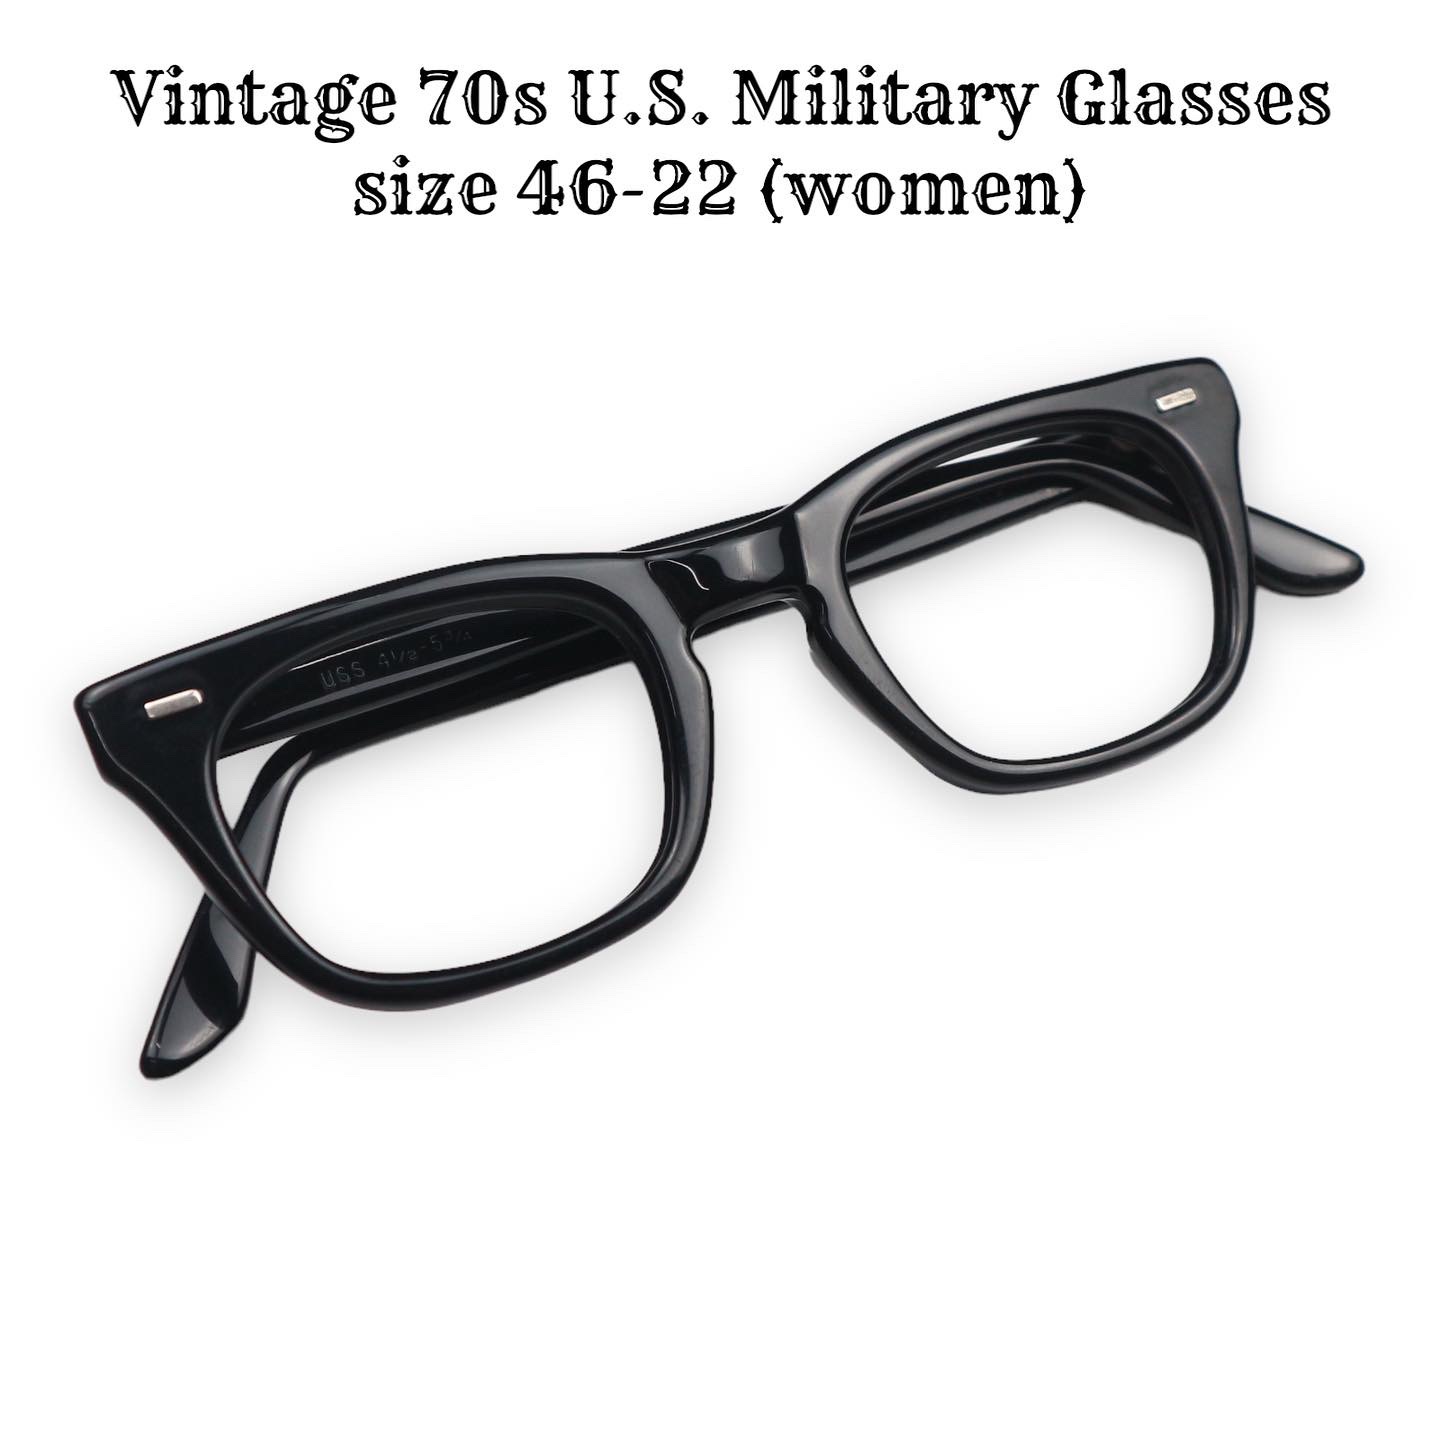 Vintage 70s U.S. Military Glasses Size 46-22 Women